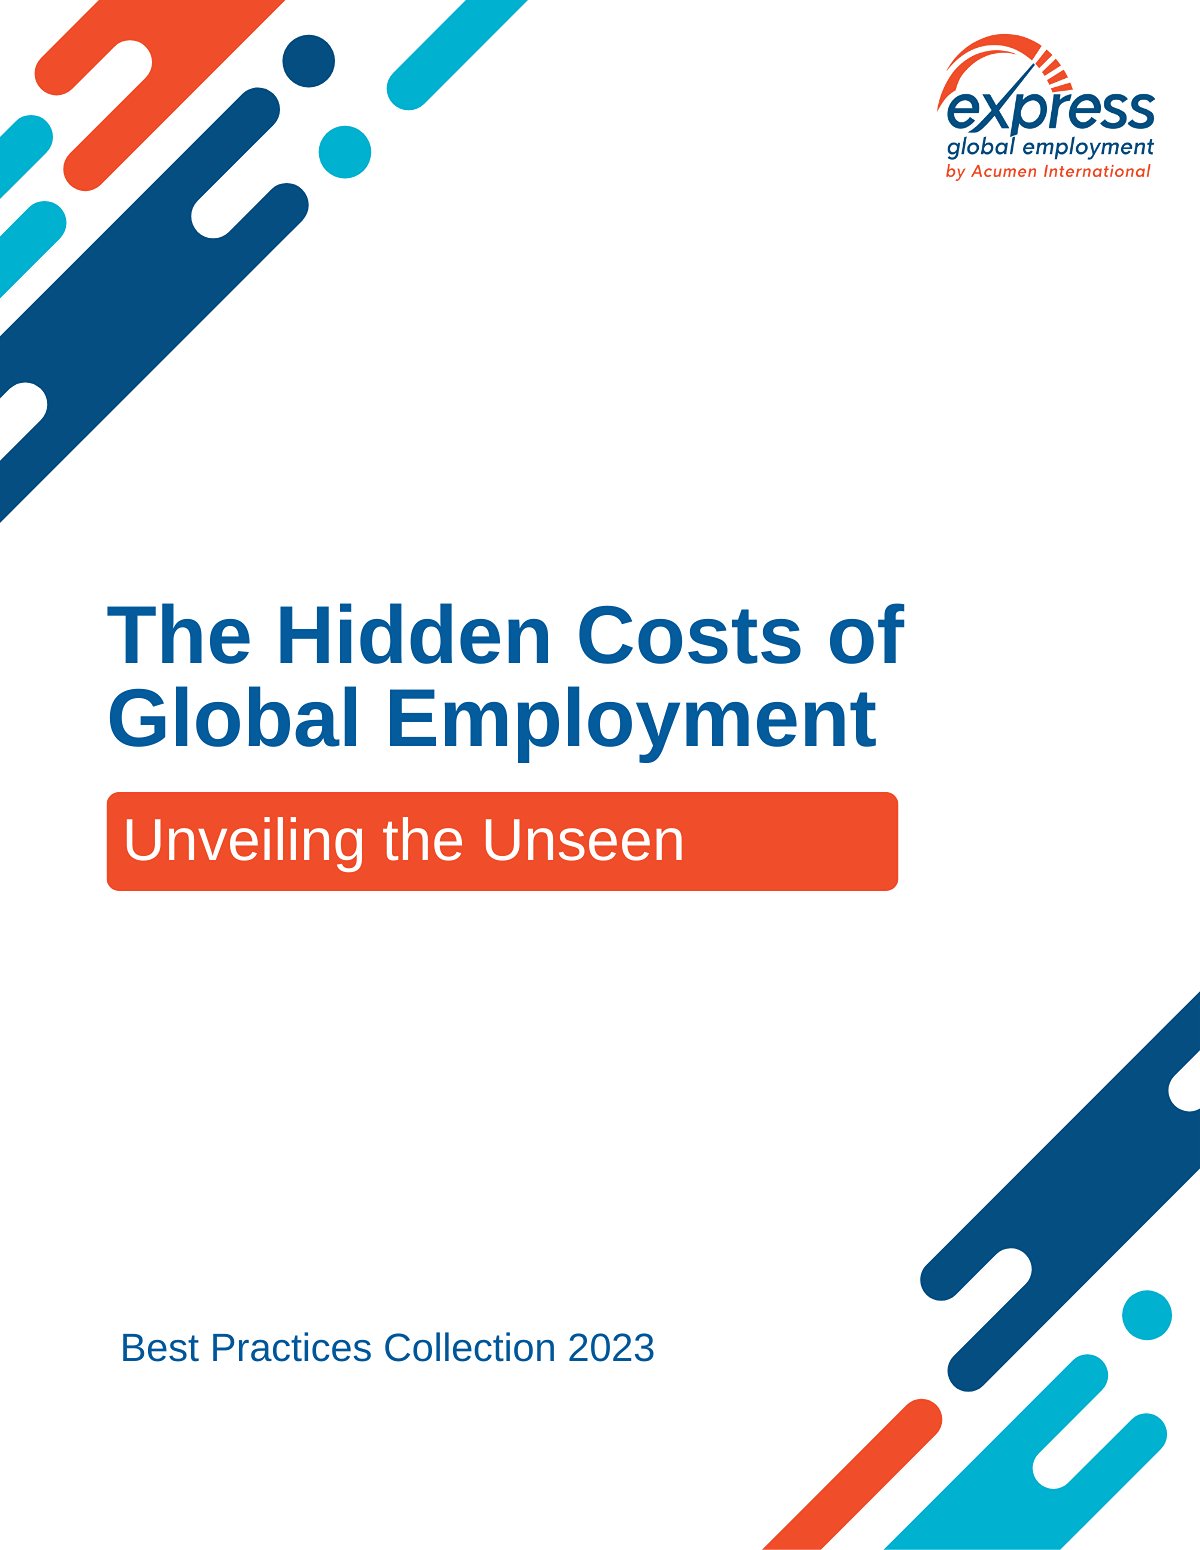 The Hidden Costs of Global Employment